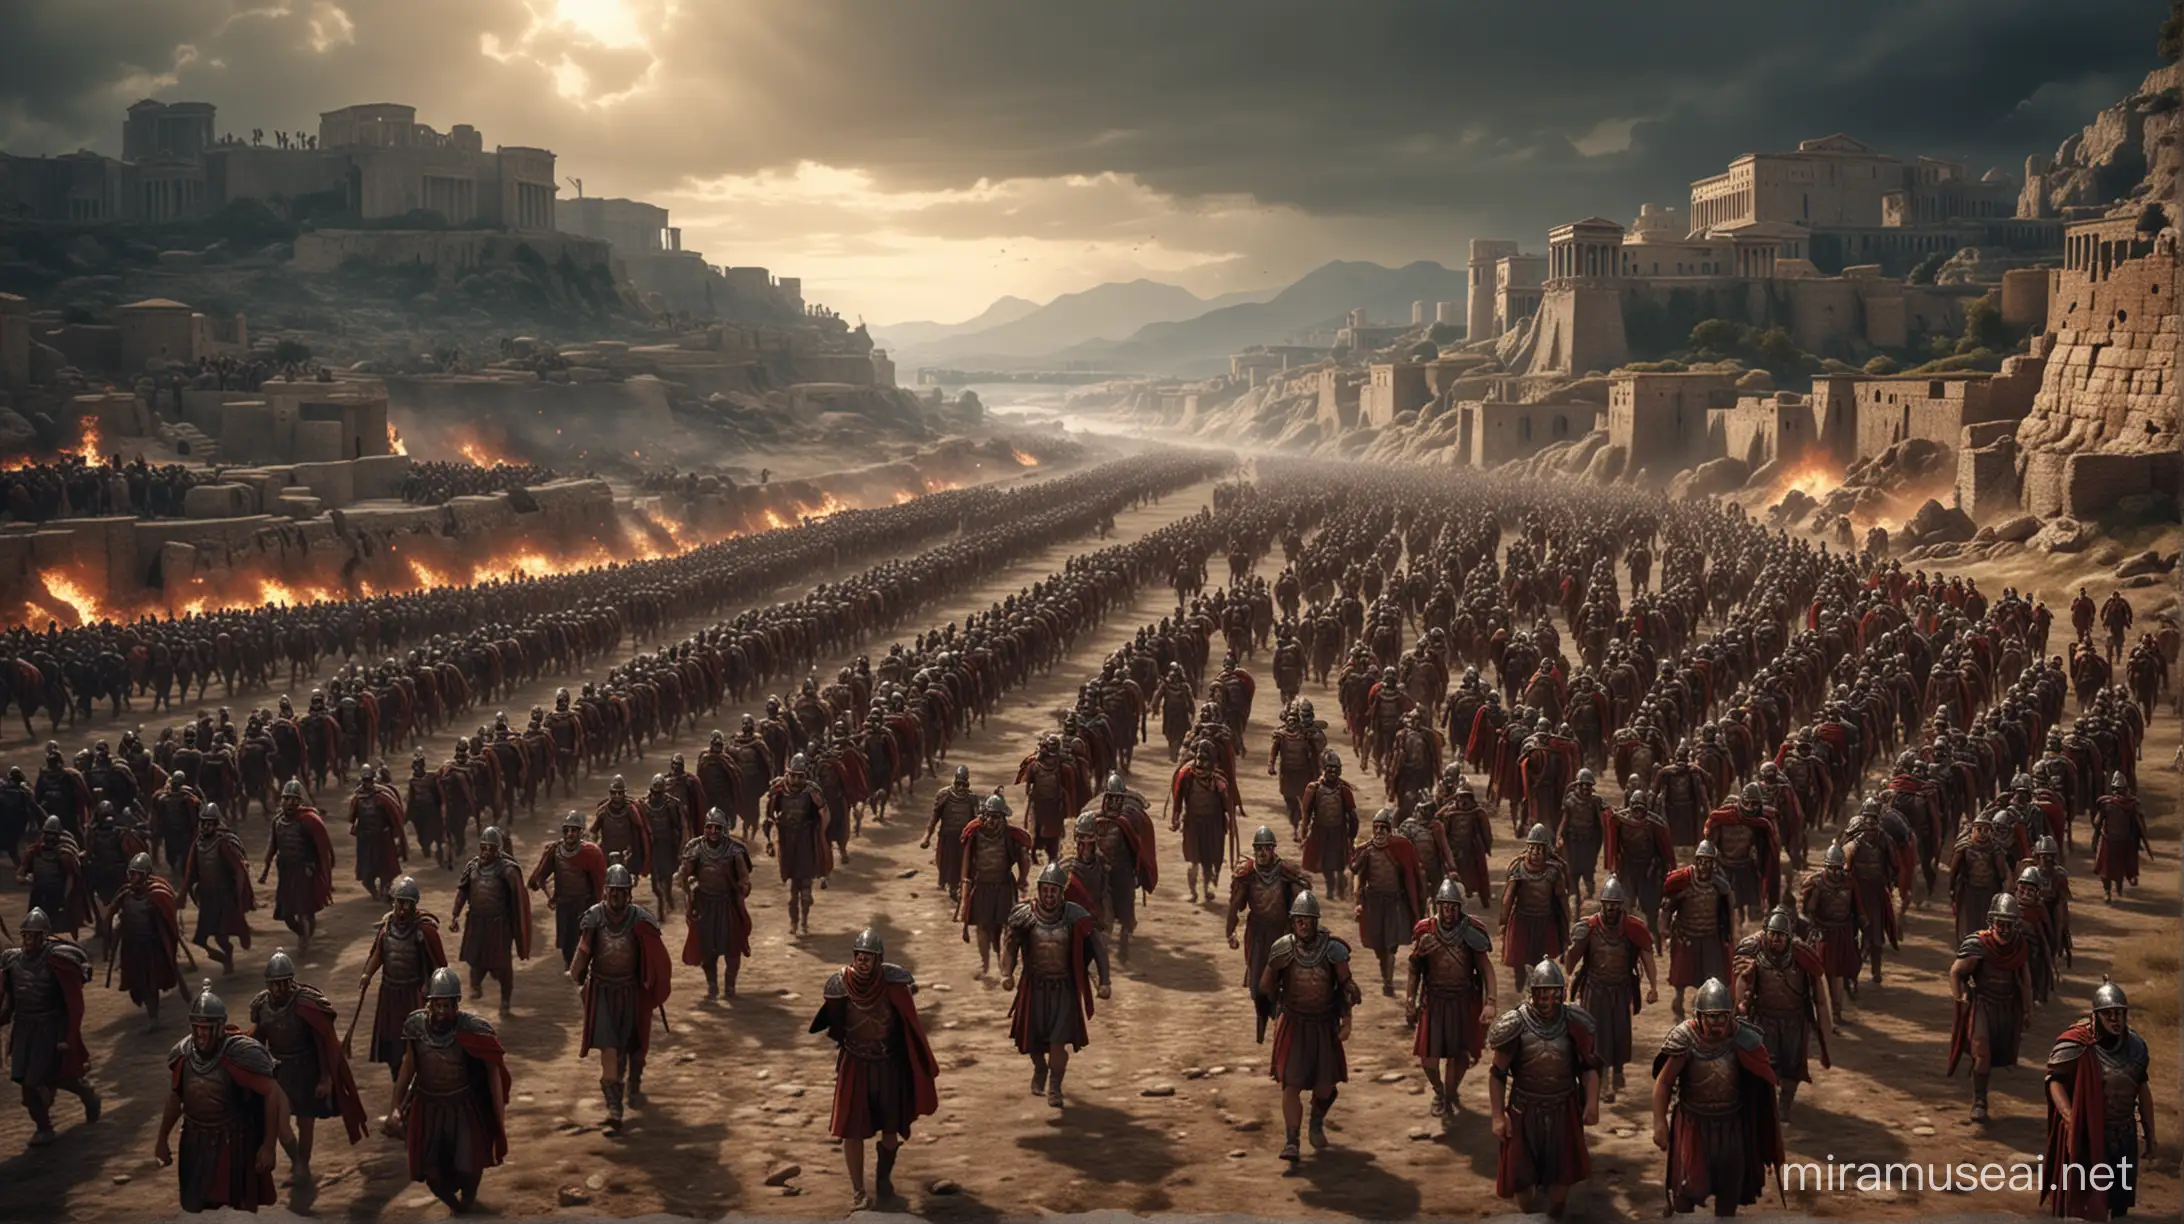 Dramatic Ancient Roman Legionaries Charging into Battle